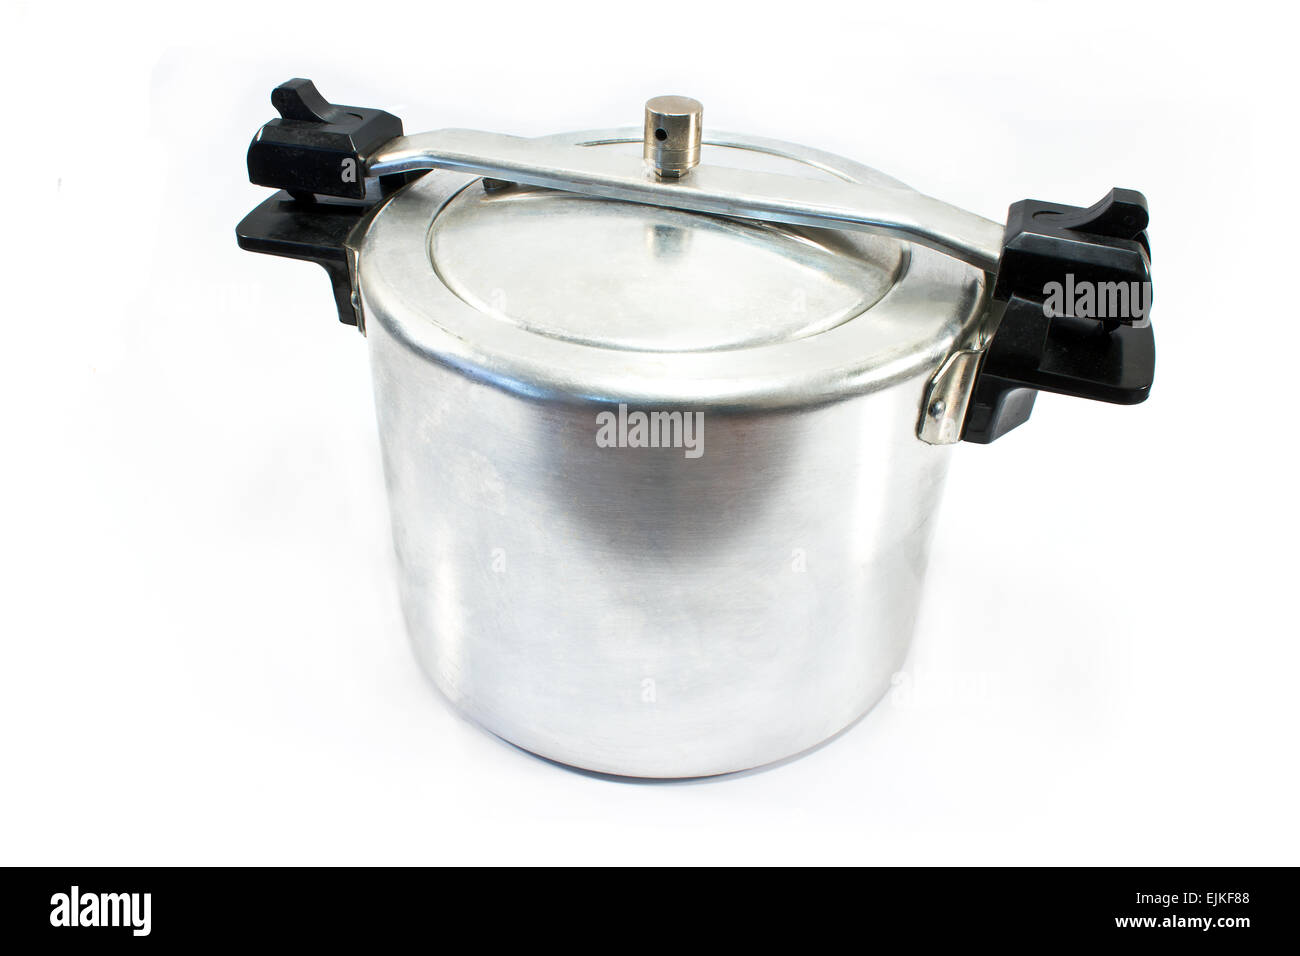 Hochdruck-Aluminium Kochtopf isoliert auf weiss Stockfotografie - Alamy